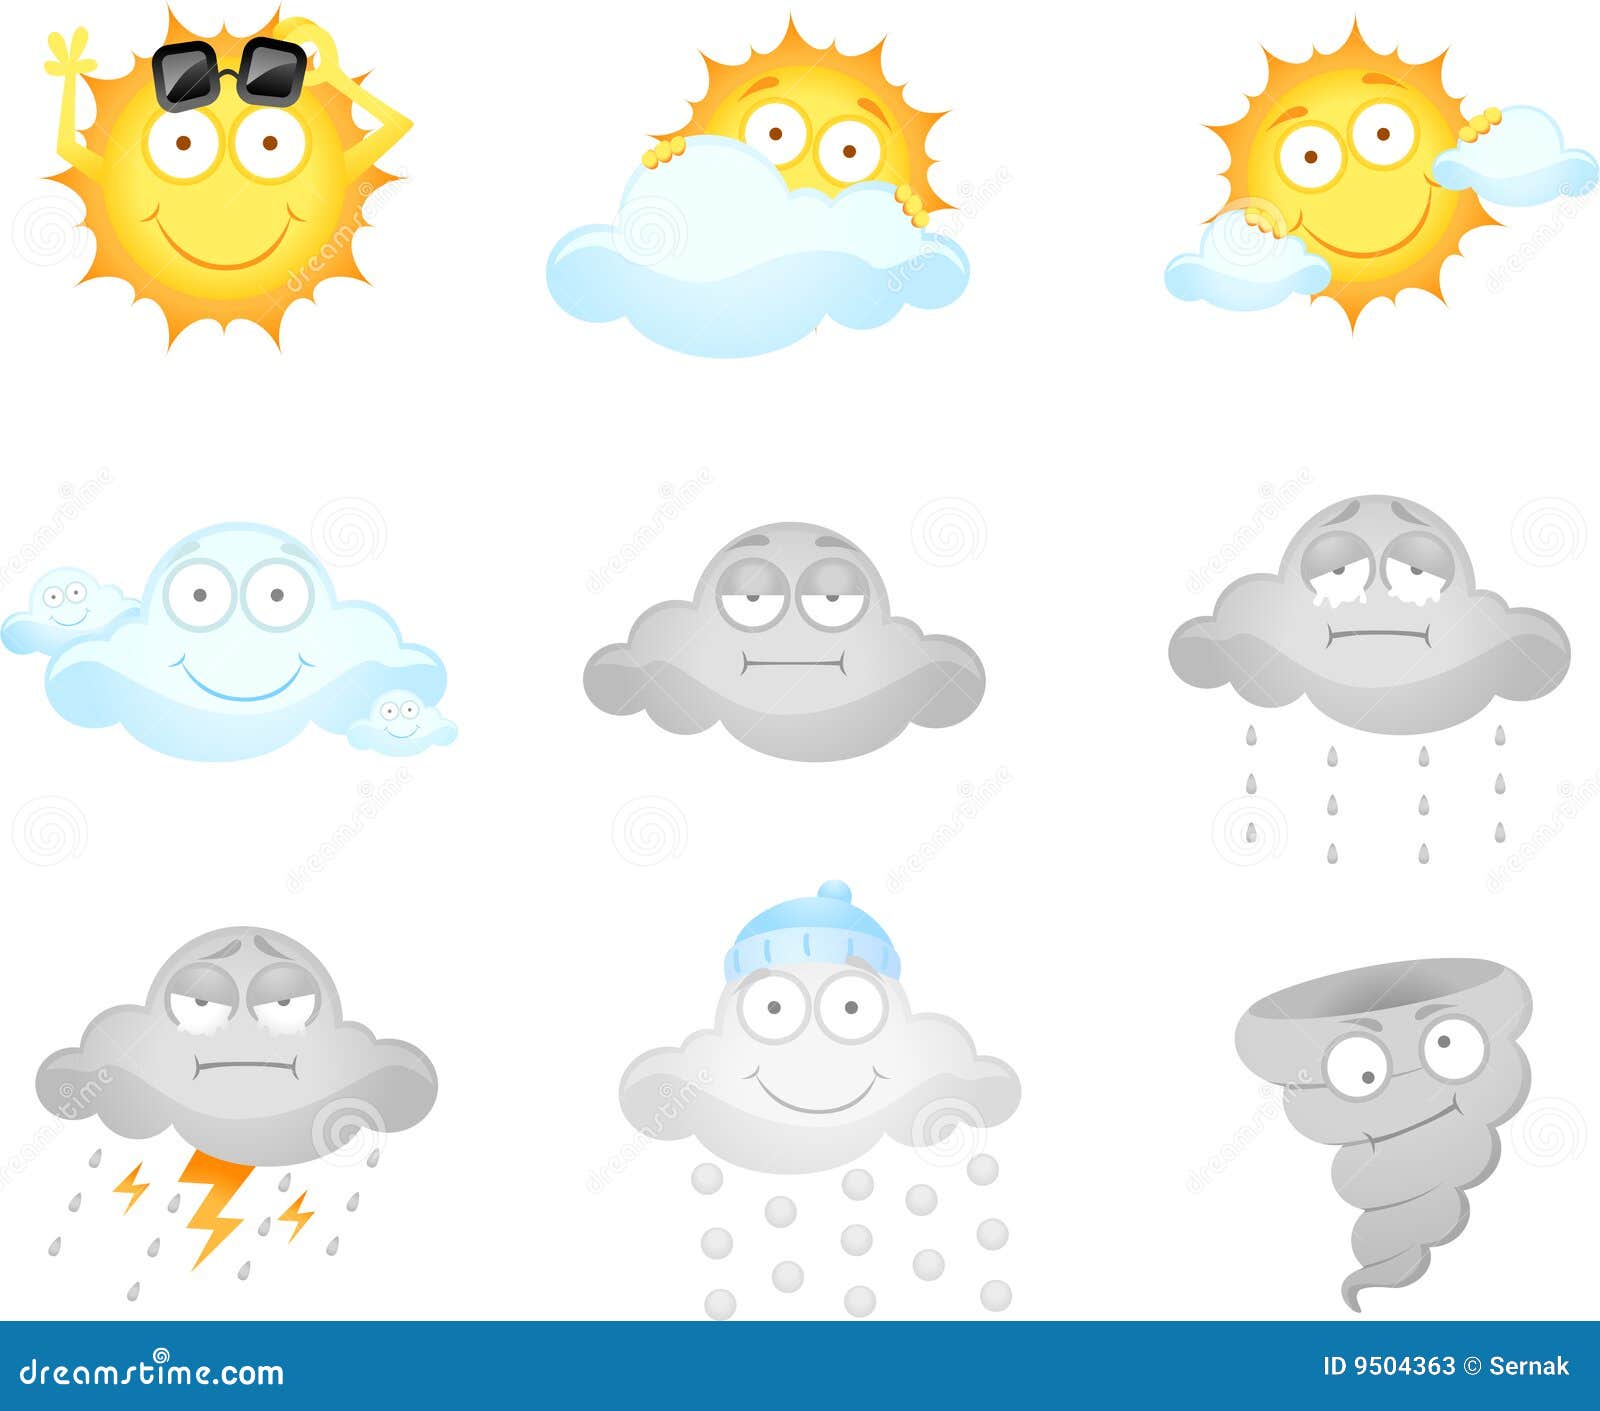 weather-icons-9504363.jpg (1300×1163)